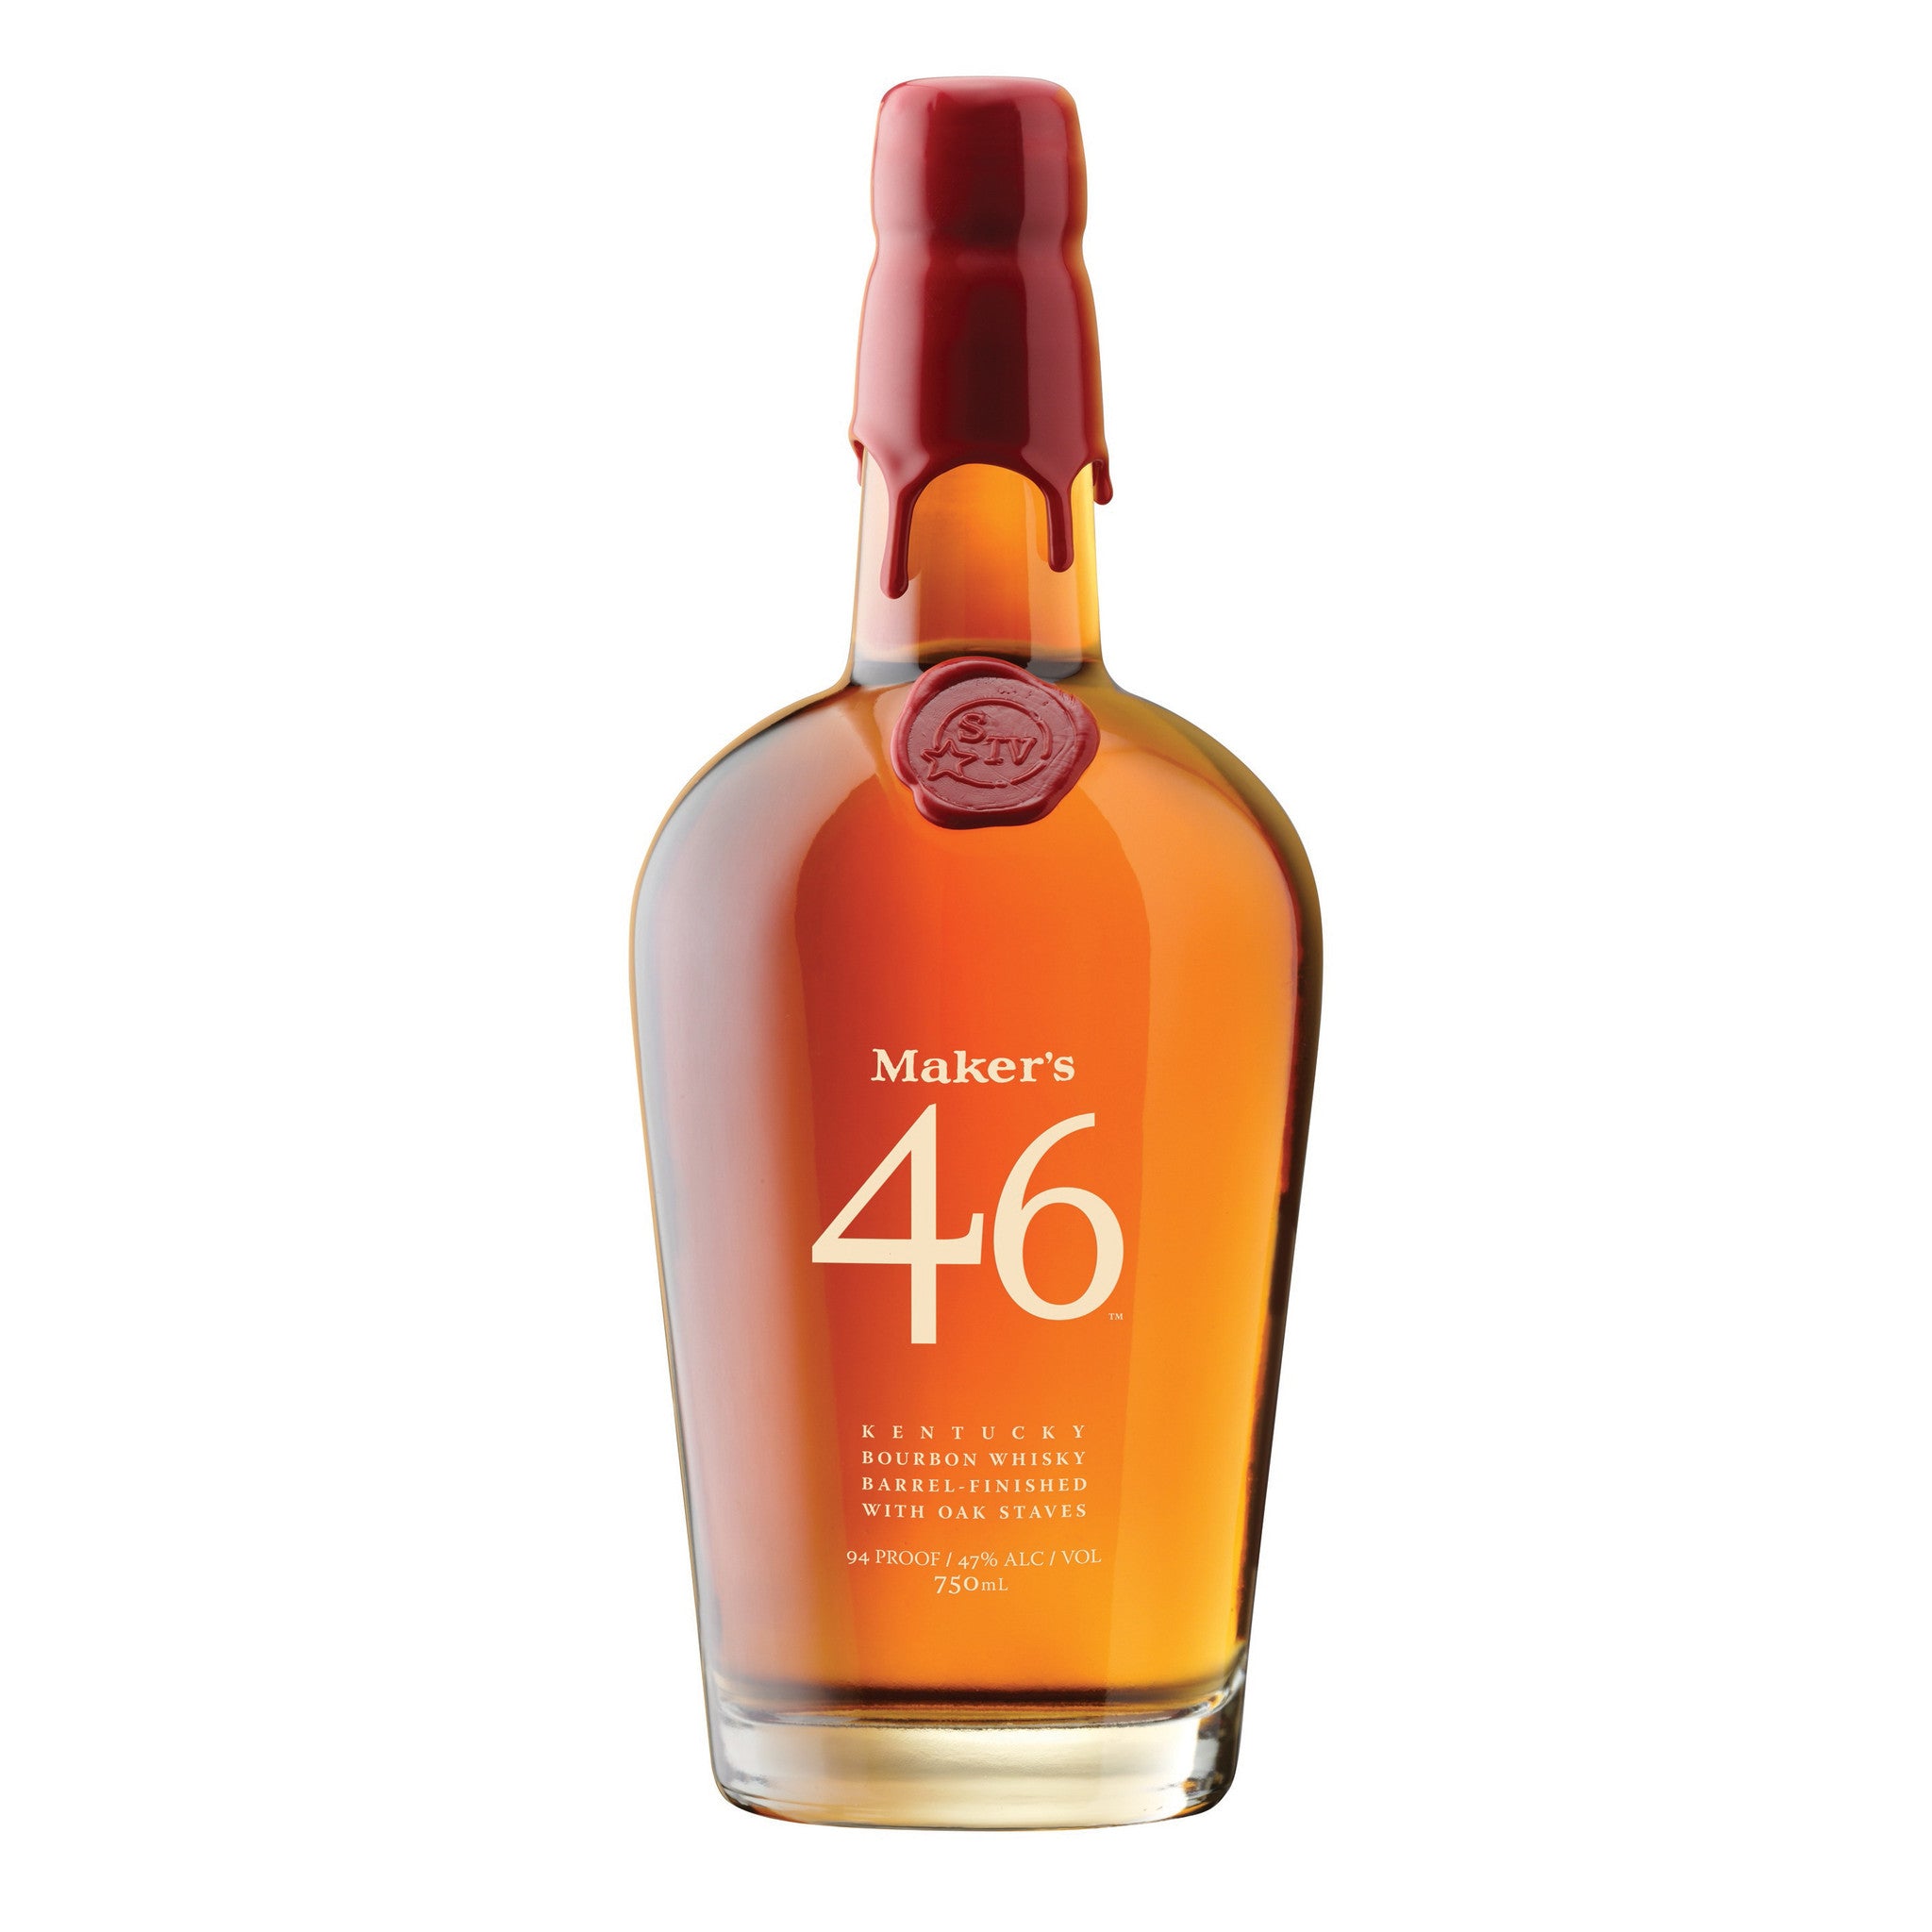 Makers Mark 46 Bourbon